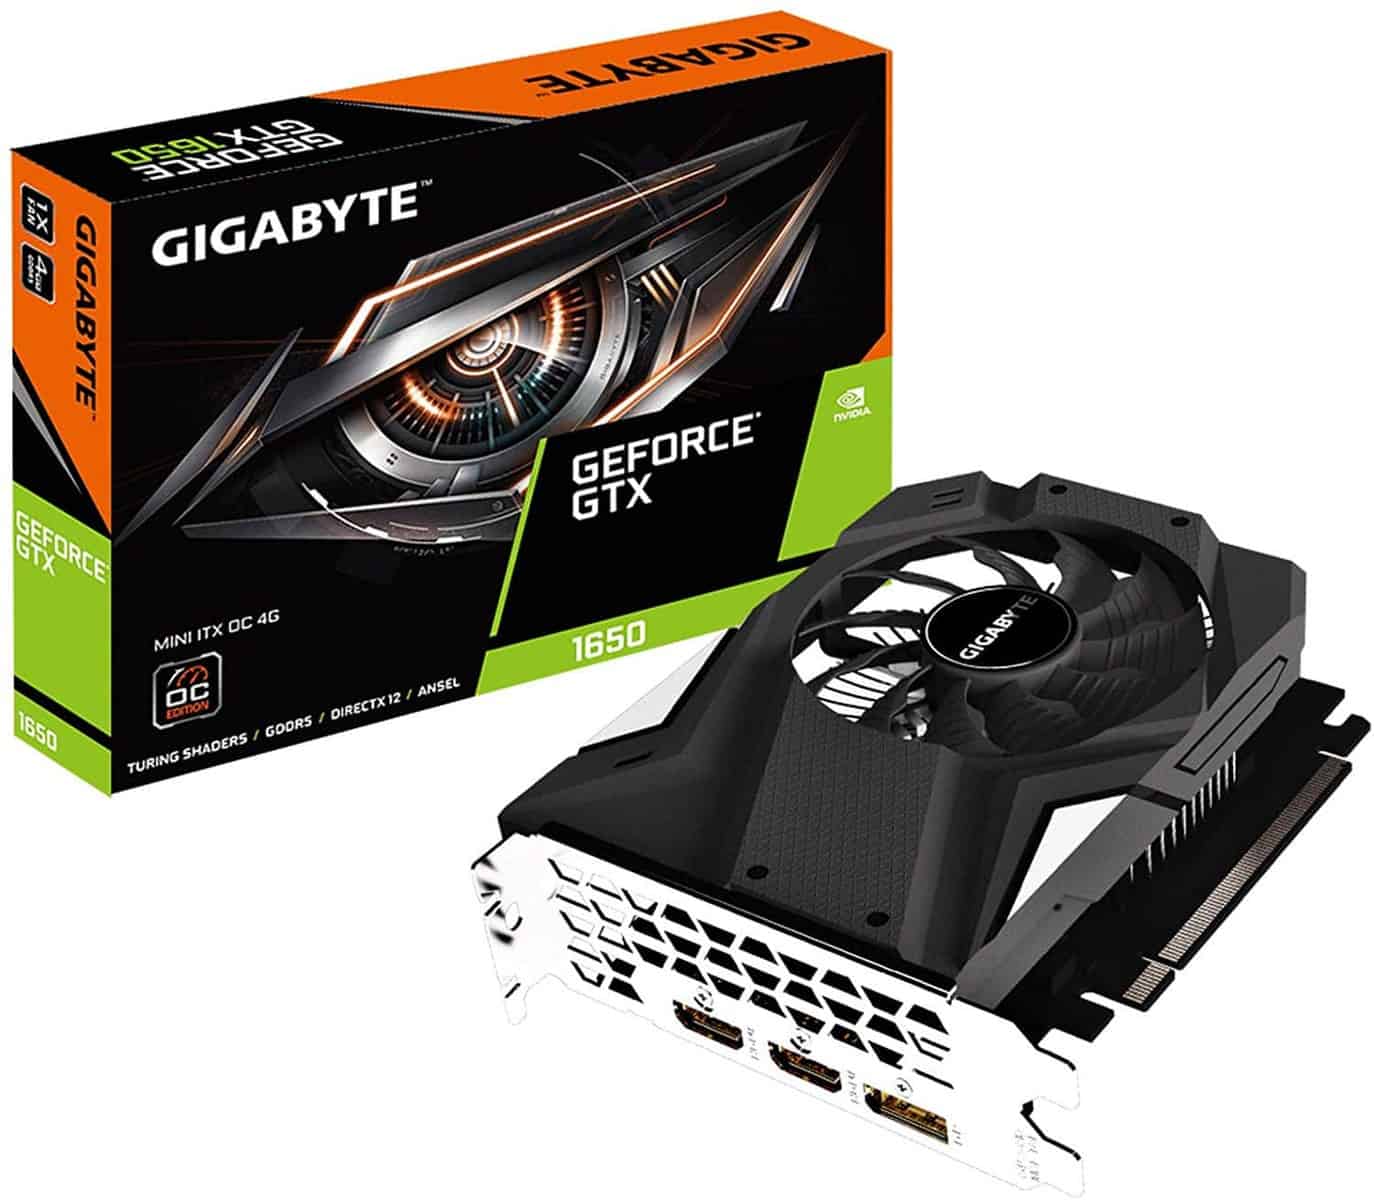 GIGABYTE GeForce GTX 1650 Mini ITX OC